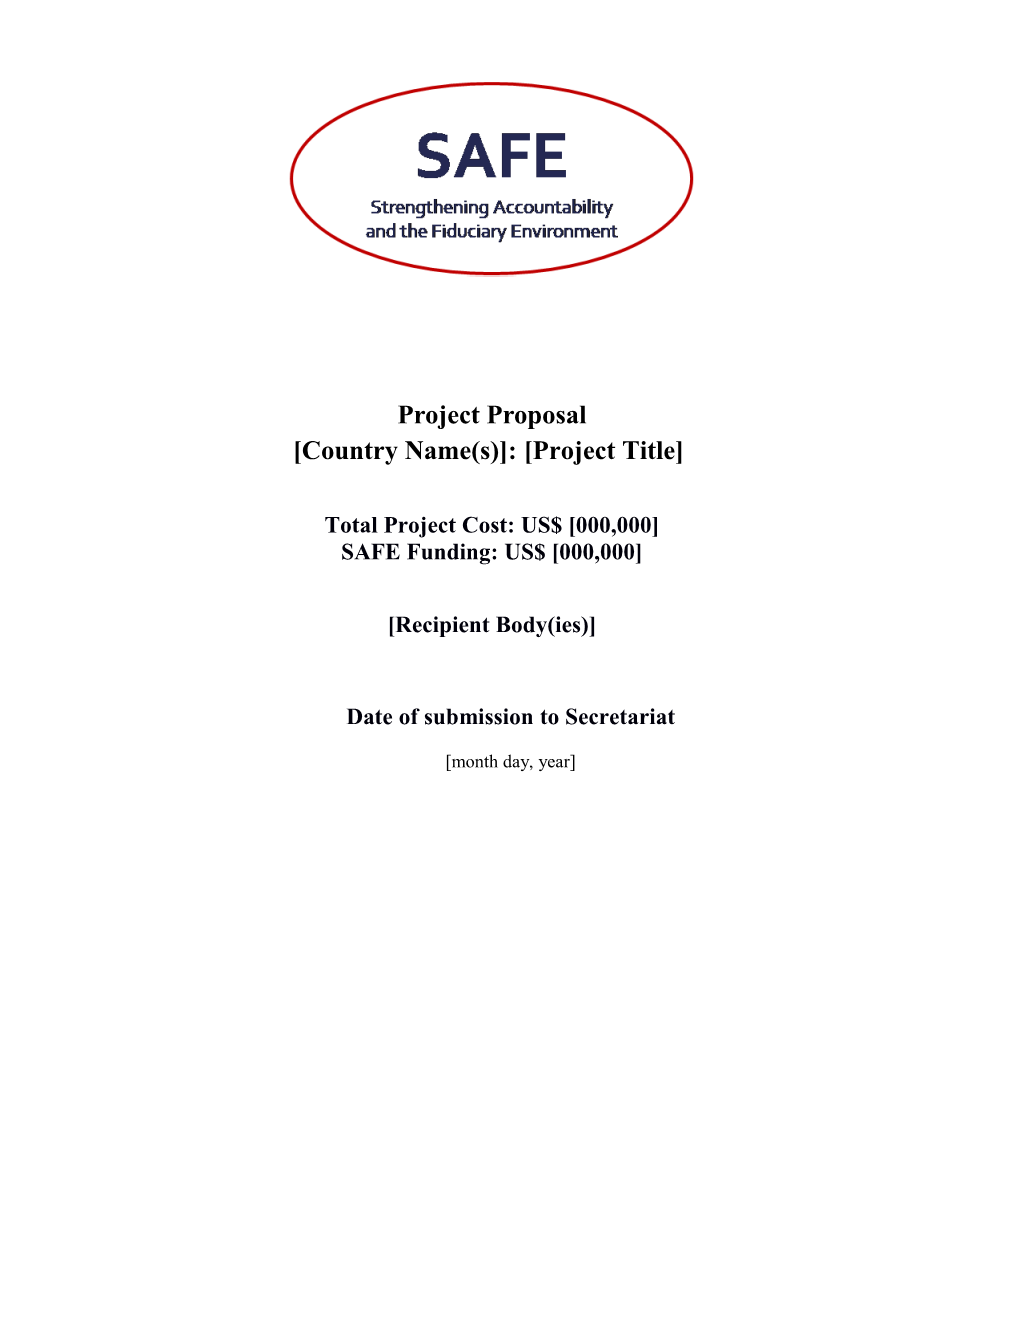 SAFE Project Application Form